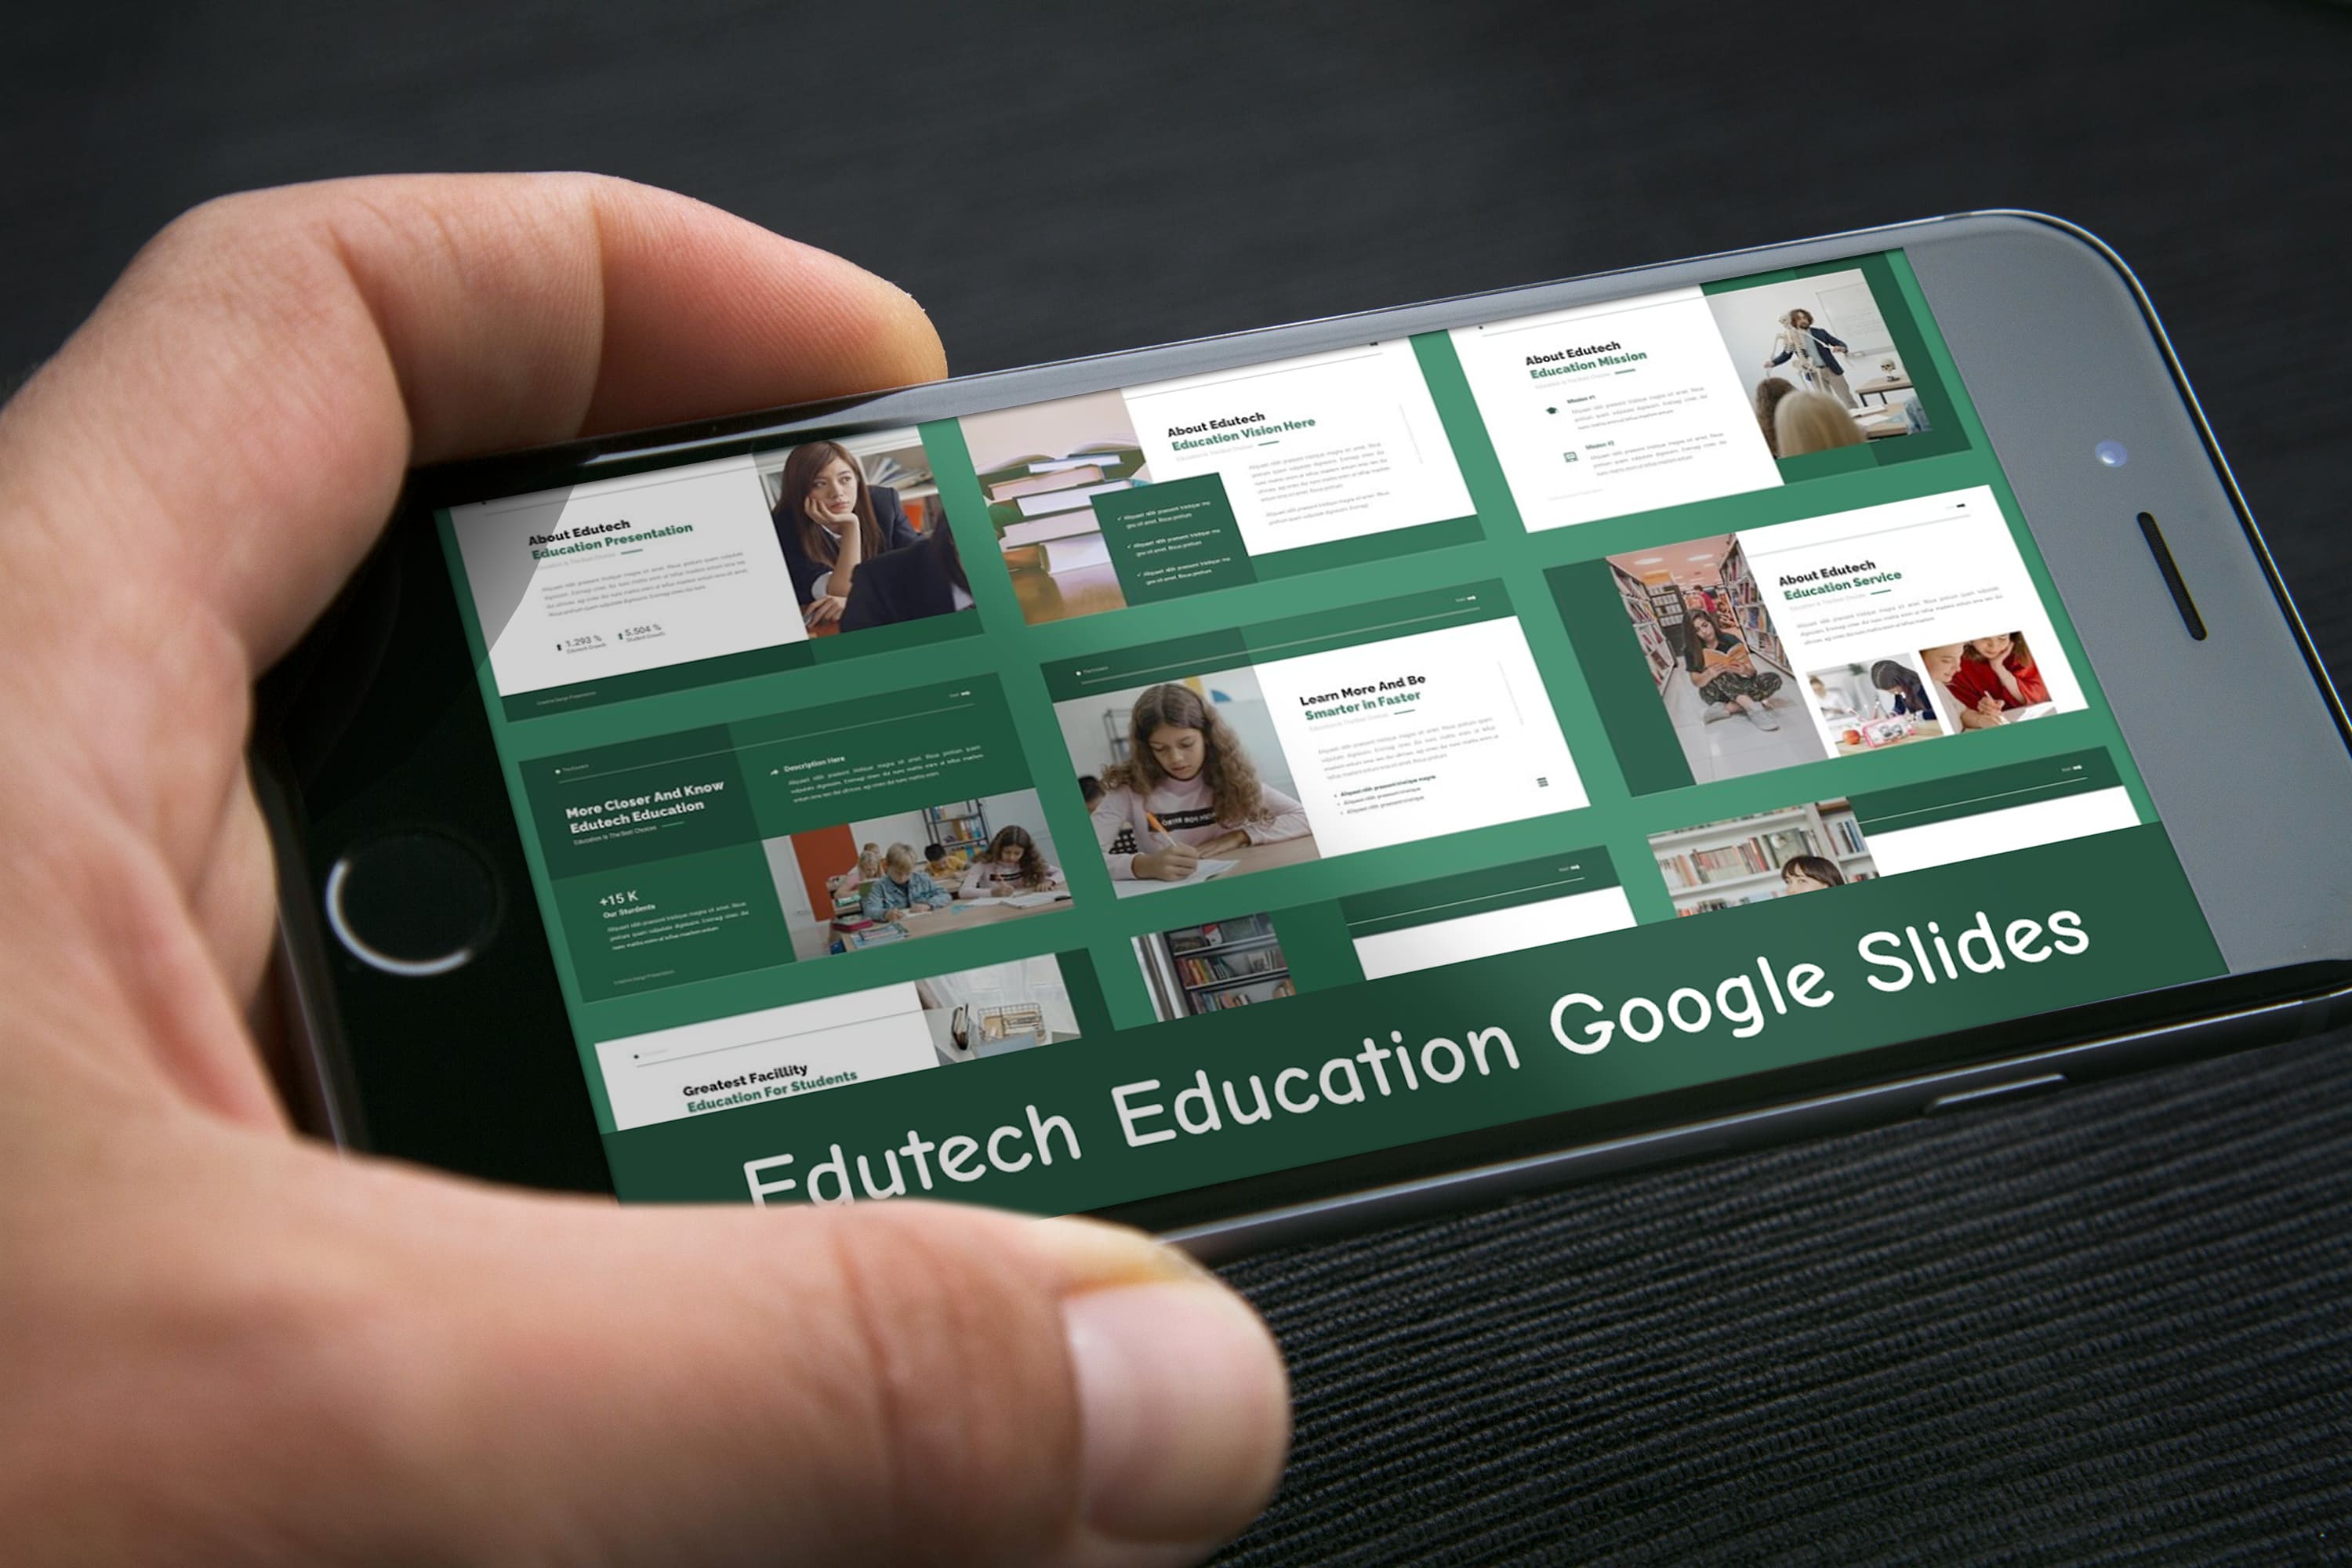 Edutech Education Google Slides - Mockup on Smartphone.